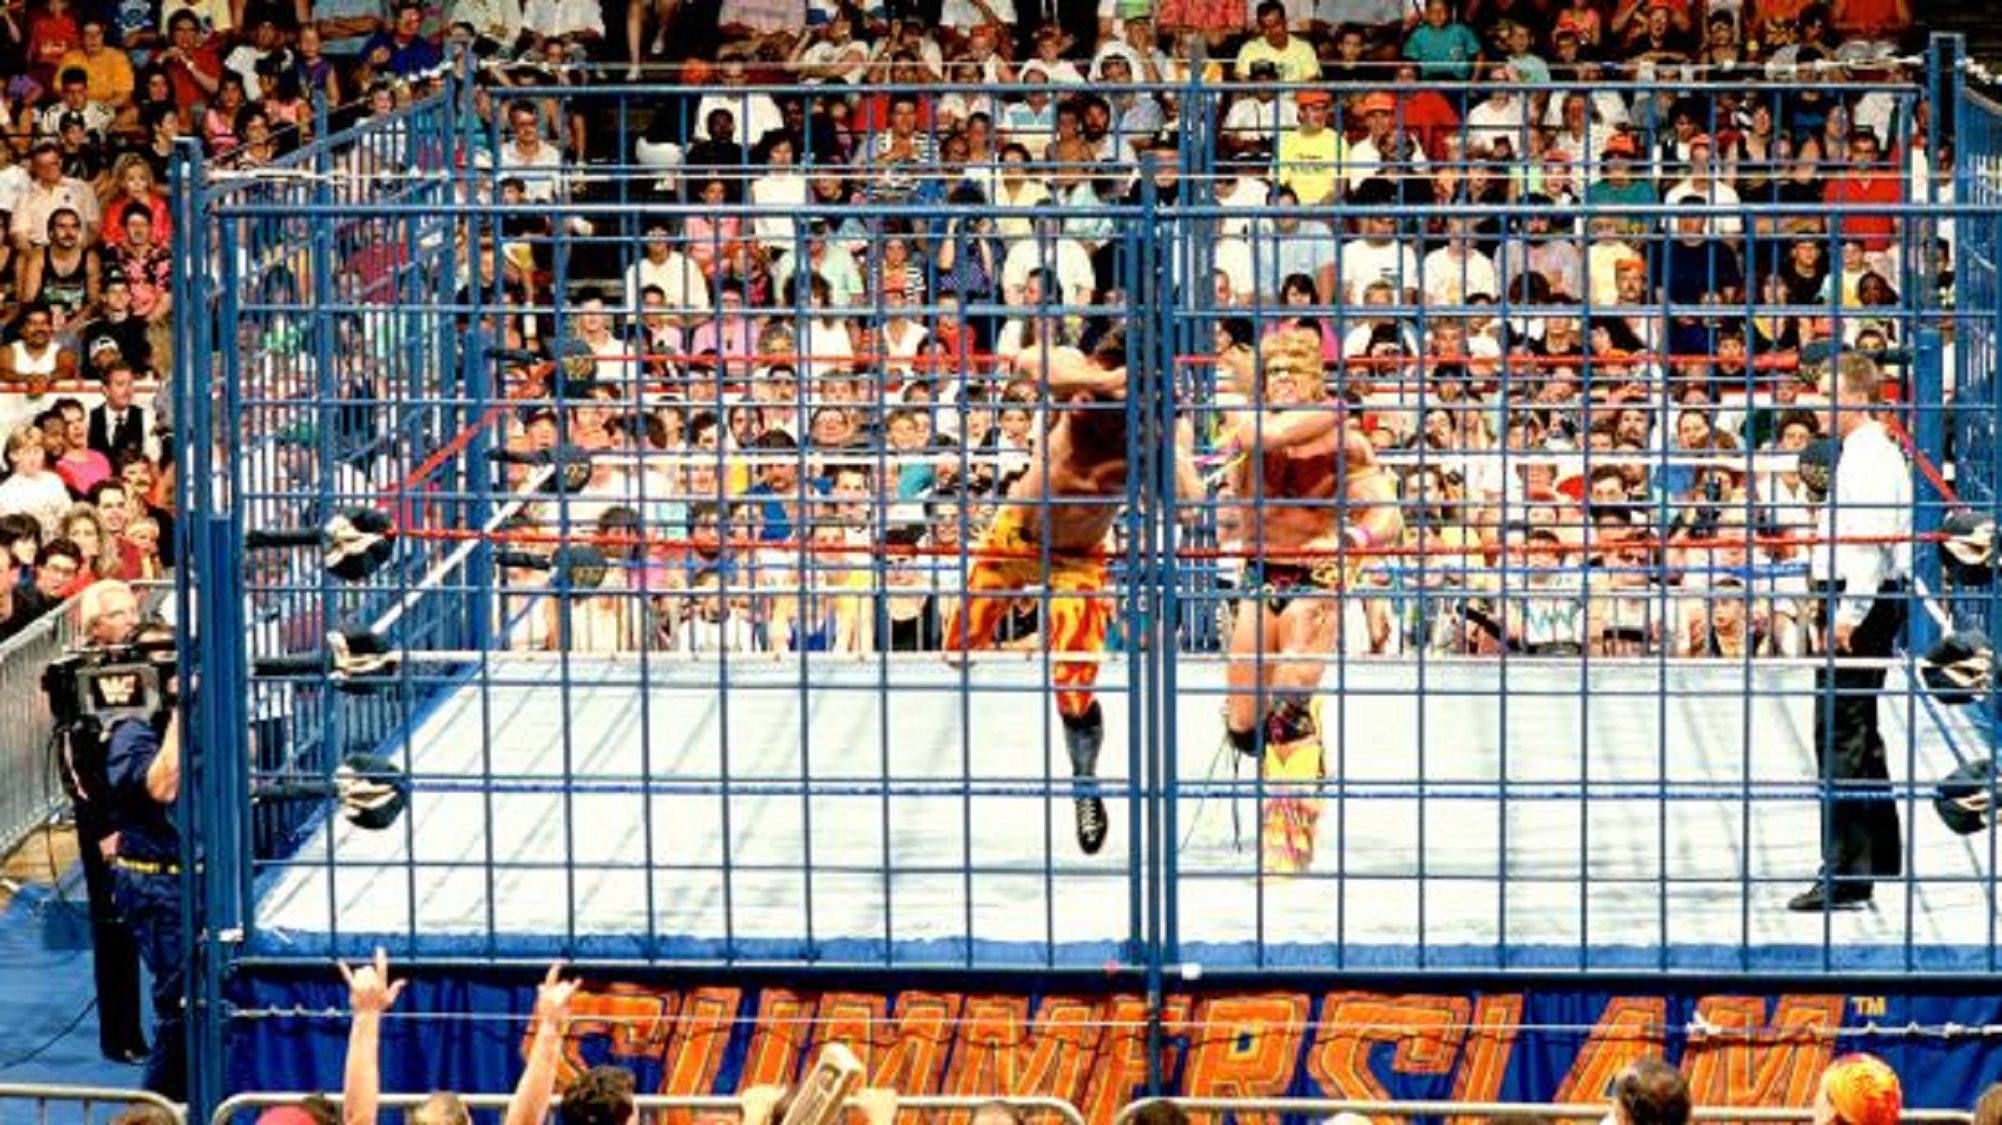 Rick Rude vs Ultimate Warrior cage match